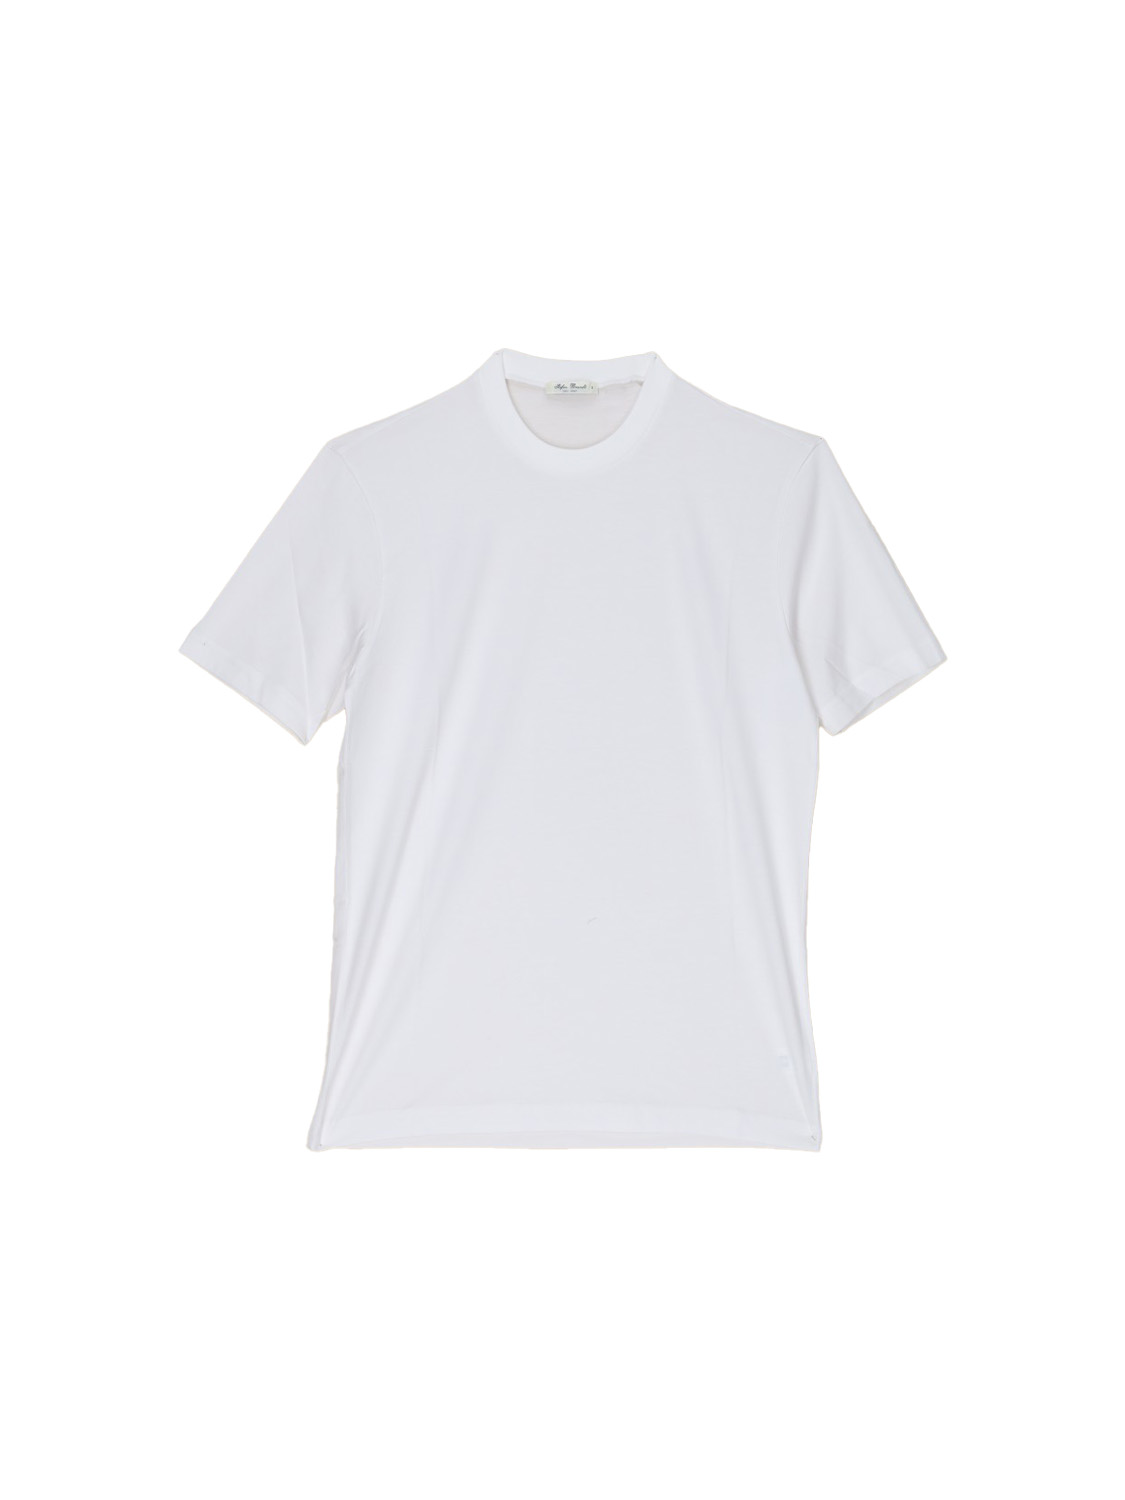 Stefan Brandt Eli 30 - T-shirt girocollo in cotone bianco XL